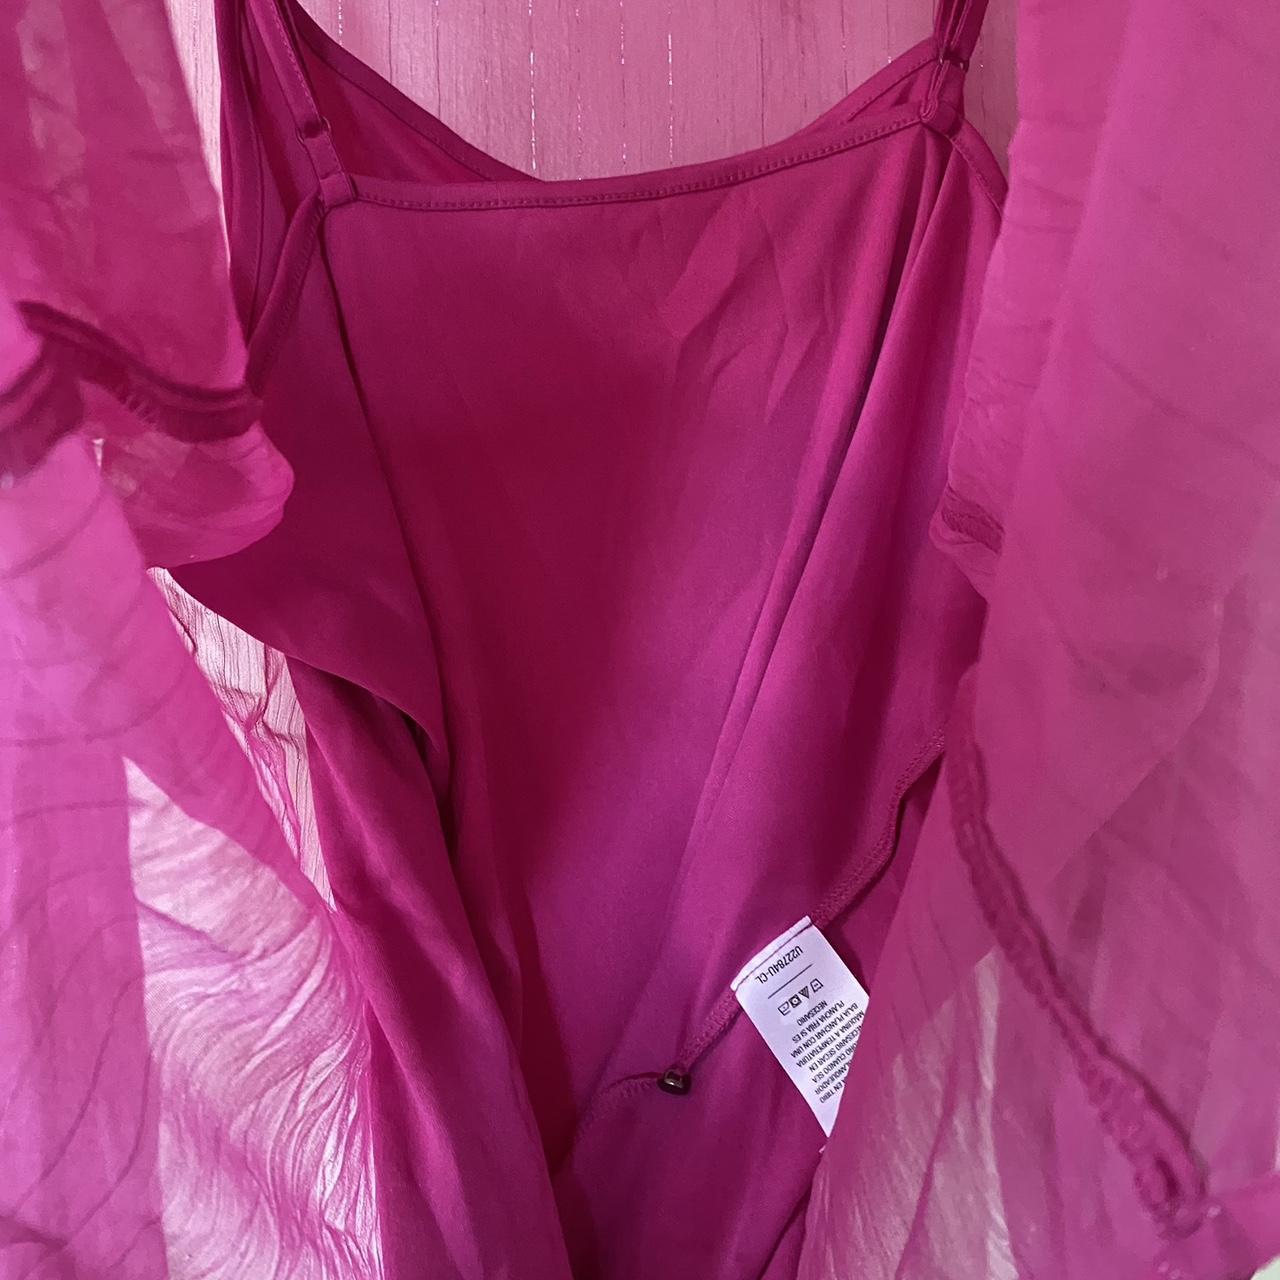 Sears Women's Pink Blouse (3)